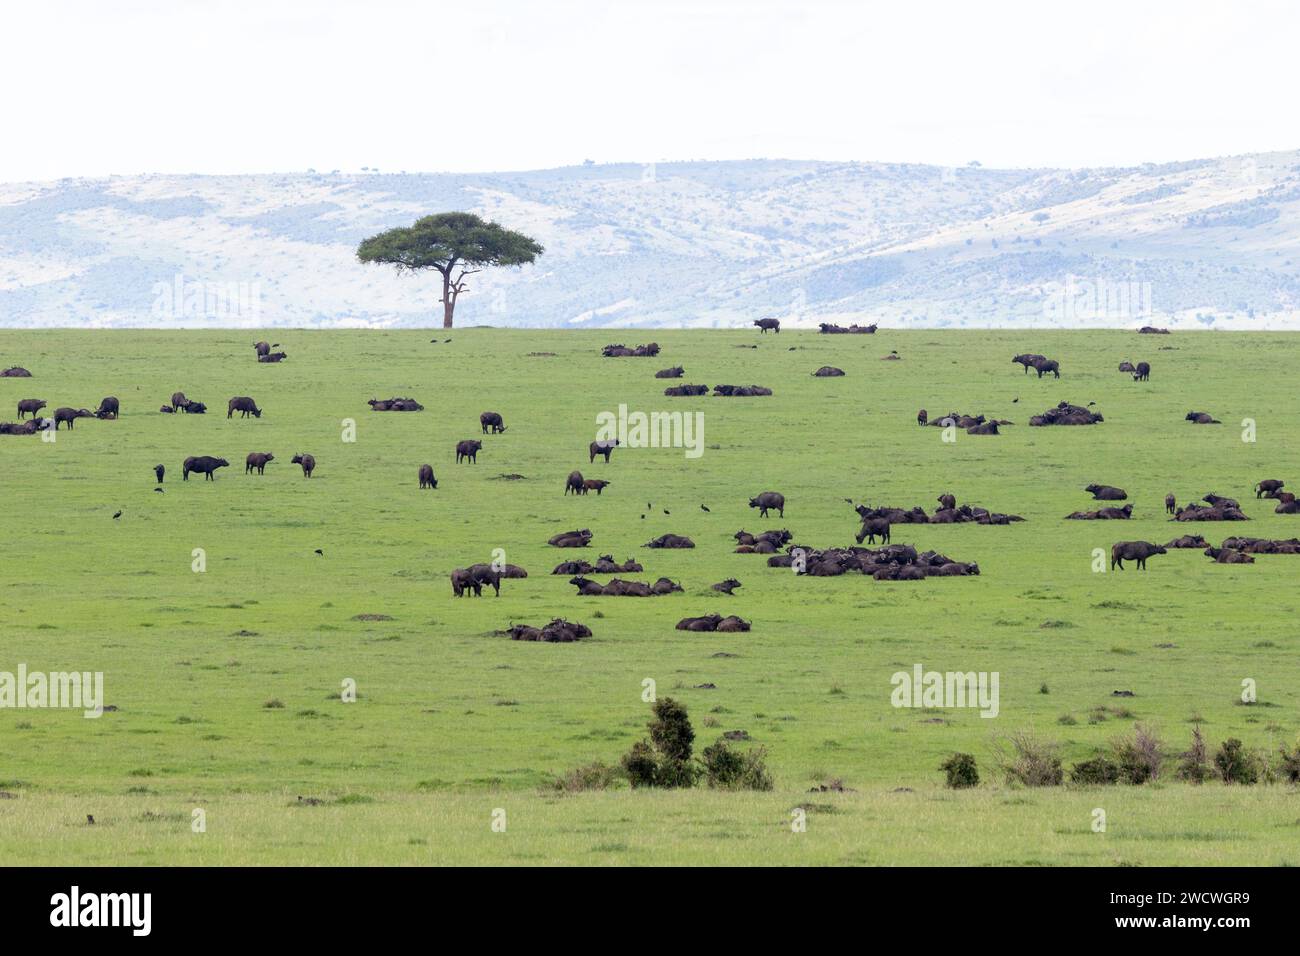 African Buffalo (Syncerus caffer)) and desert date (Balanites aegyptiaca) on the Masai Mara plains, Kenya Stock Photo